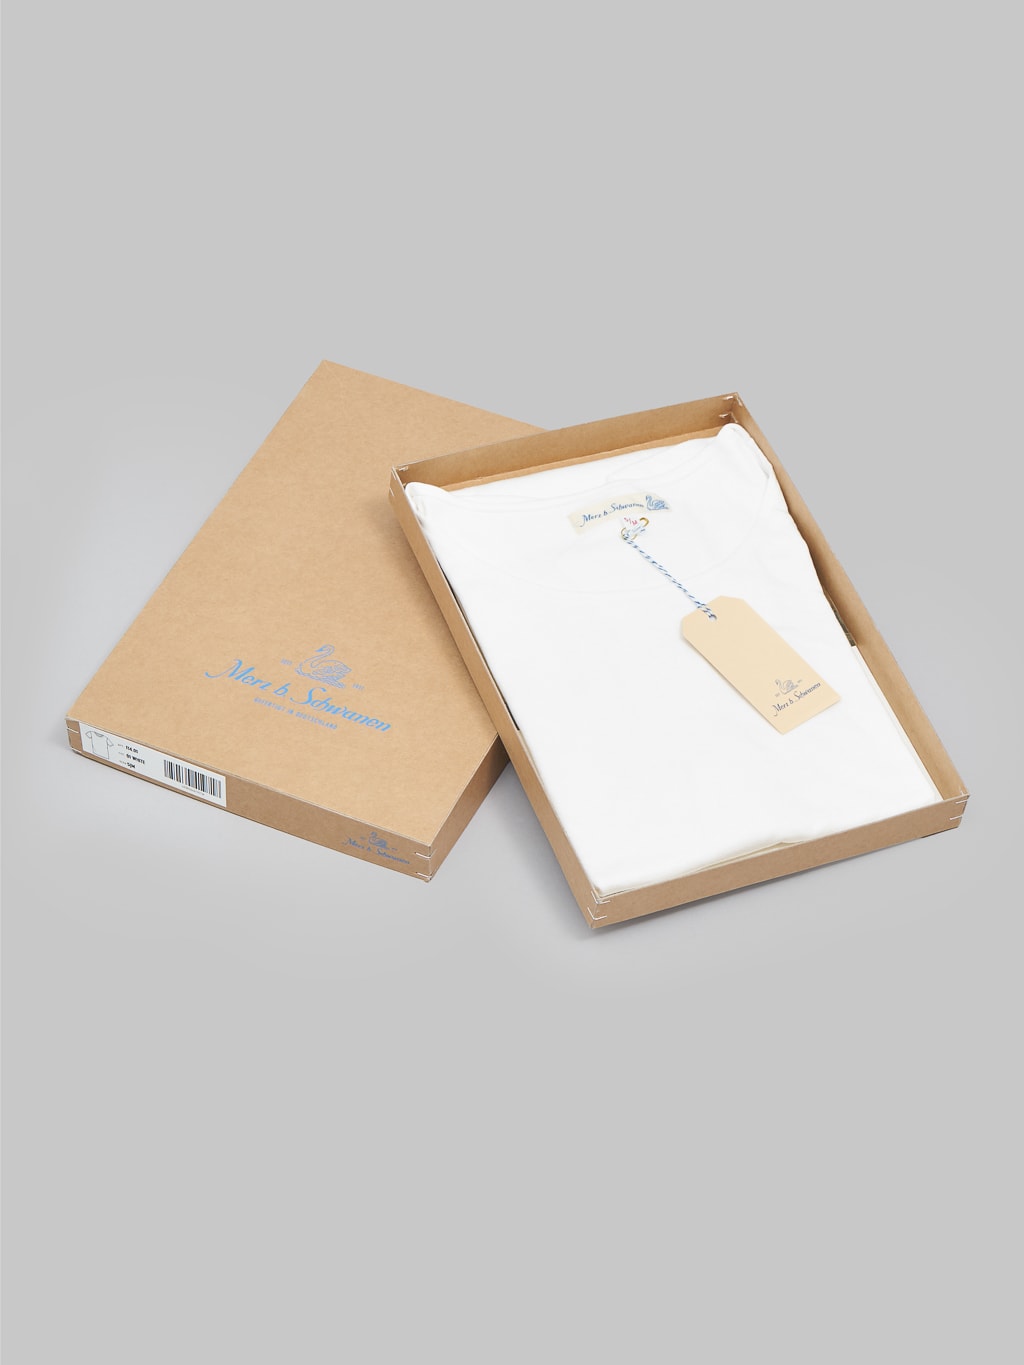 Merz b Schwanen 114 Loopwheeled TShirt white classic  packaging